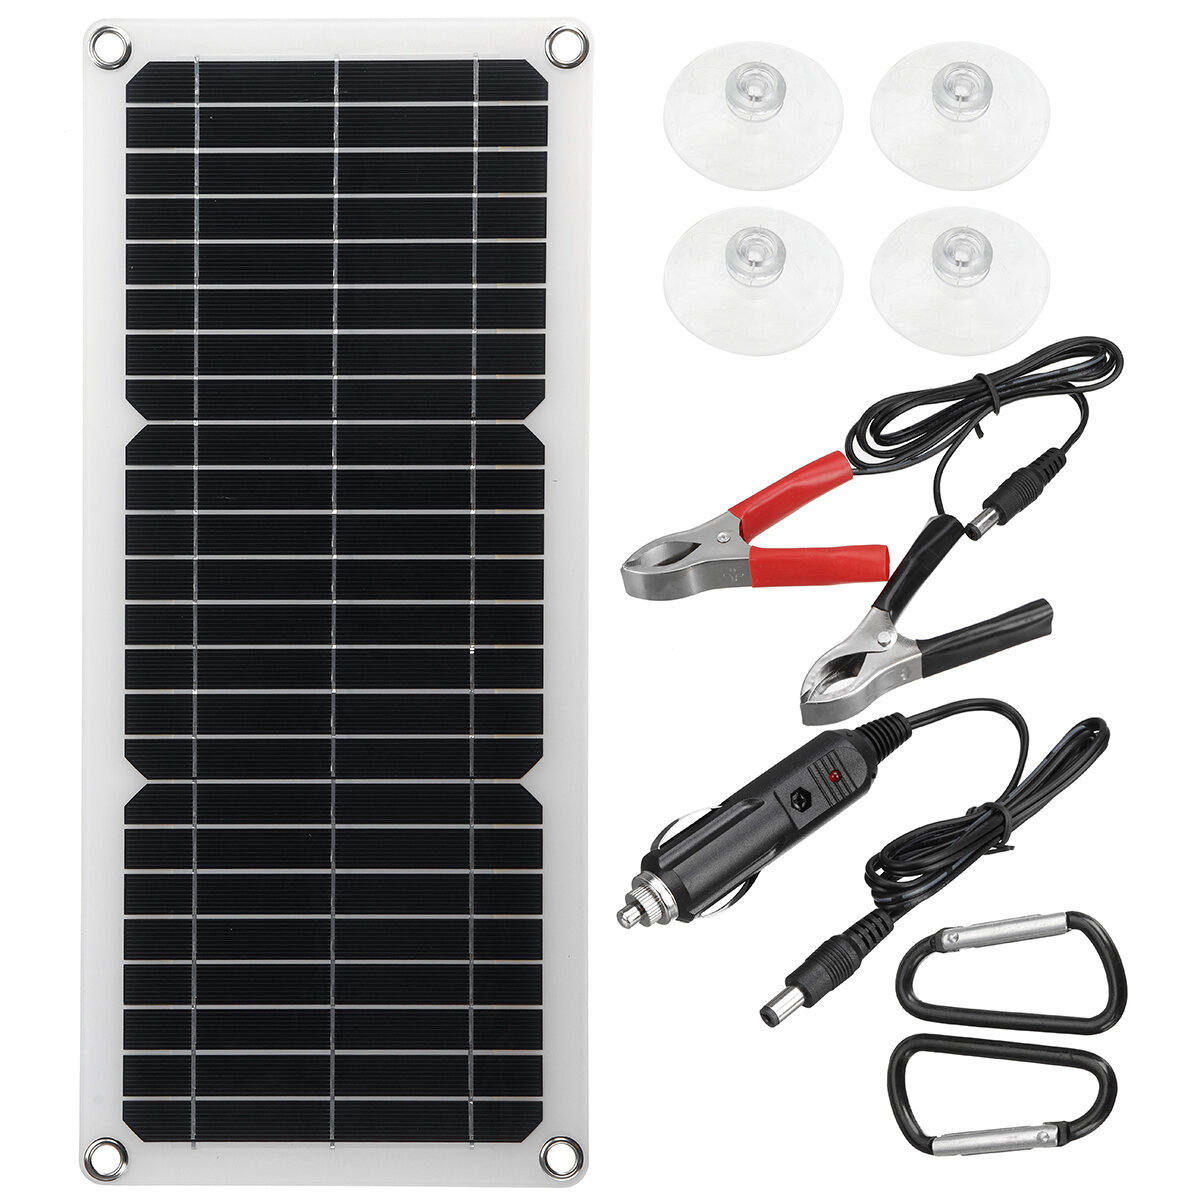 12W Solarpanel USB-Ausgang Hon Ladegeräte Solarzellen Tragbare Outdoor Camping Notstrom